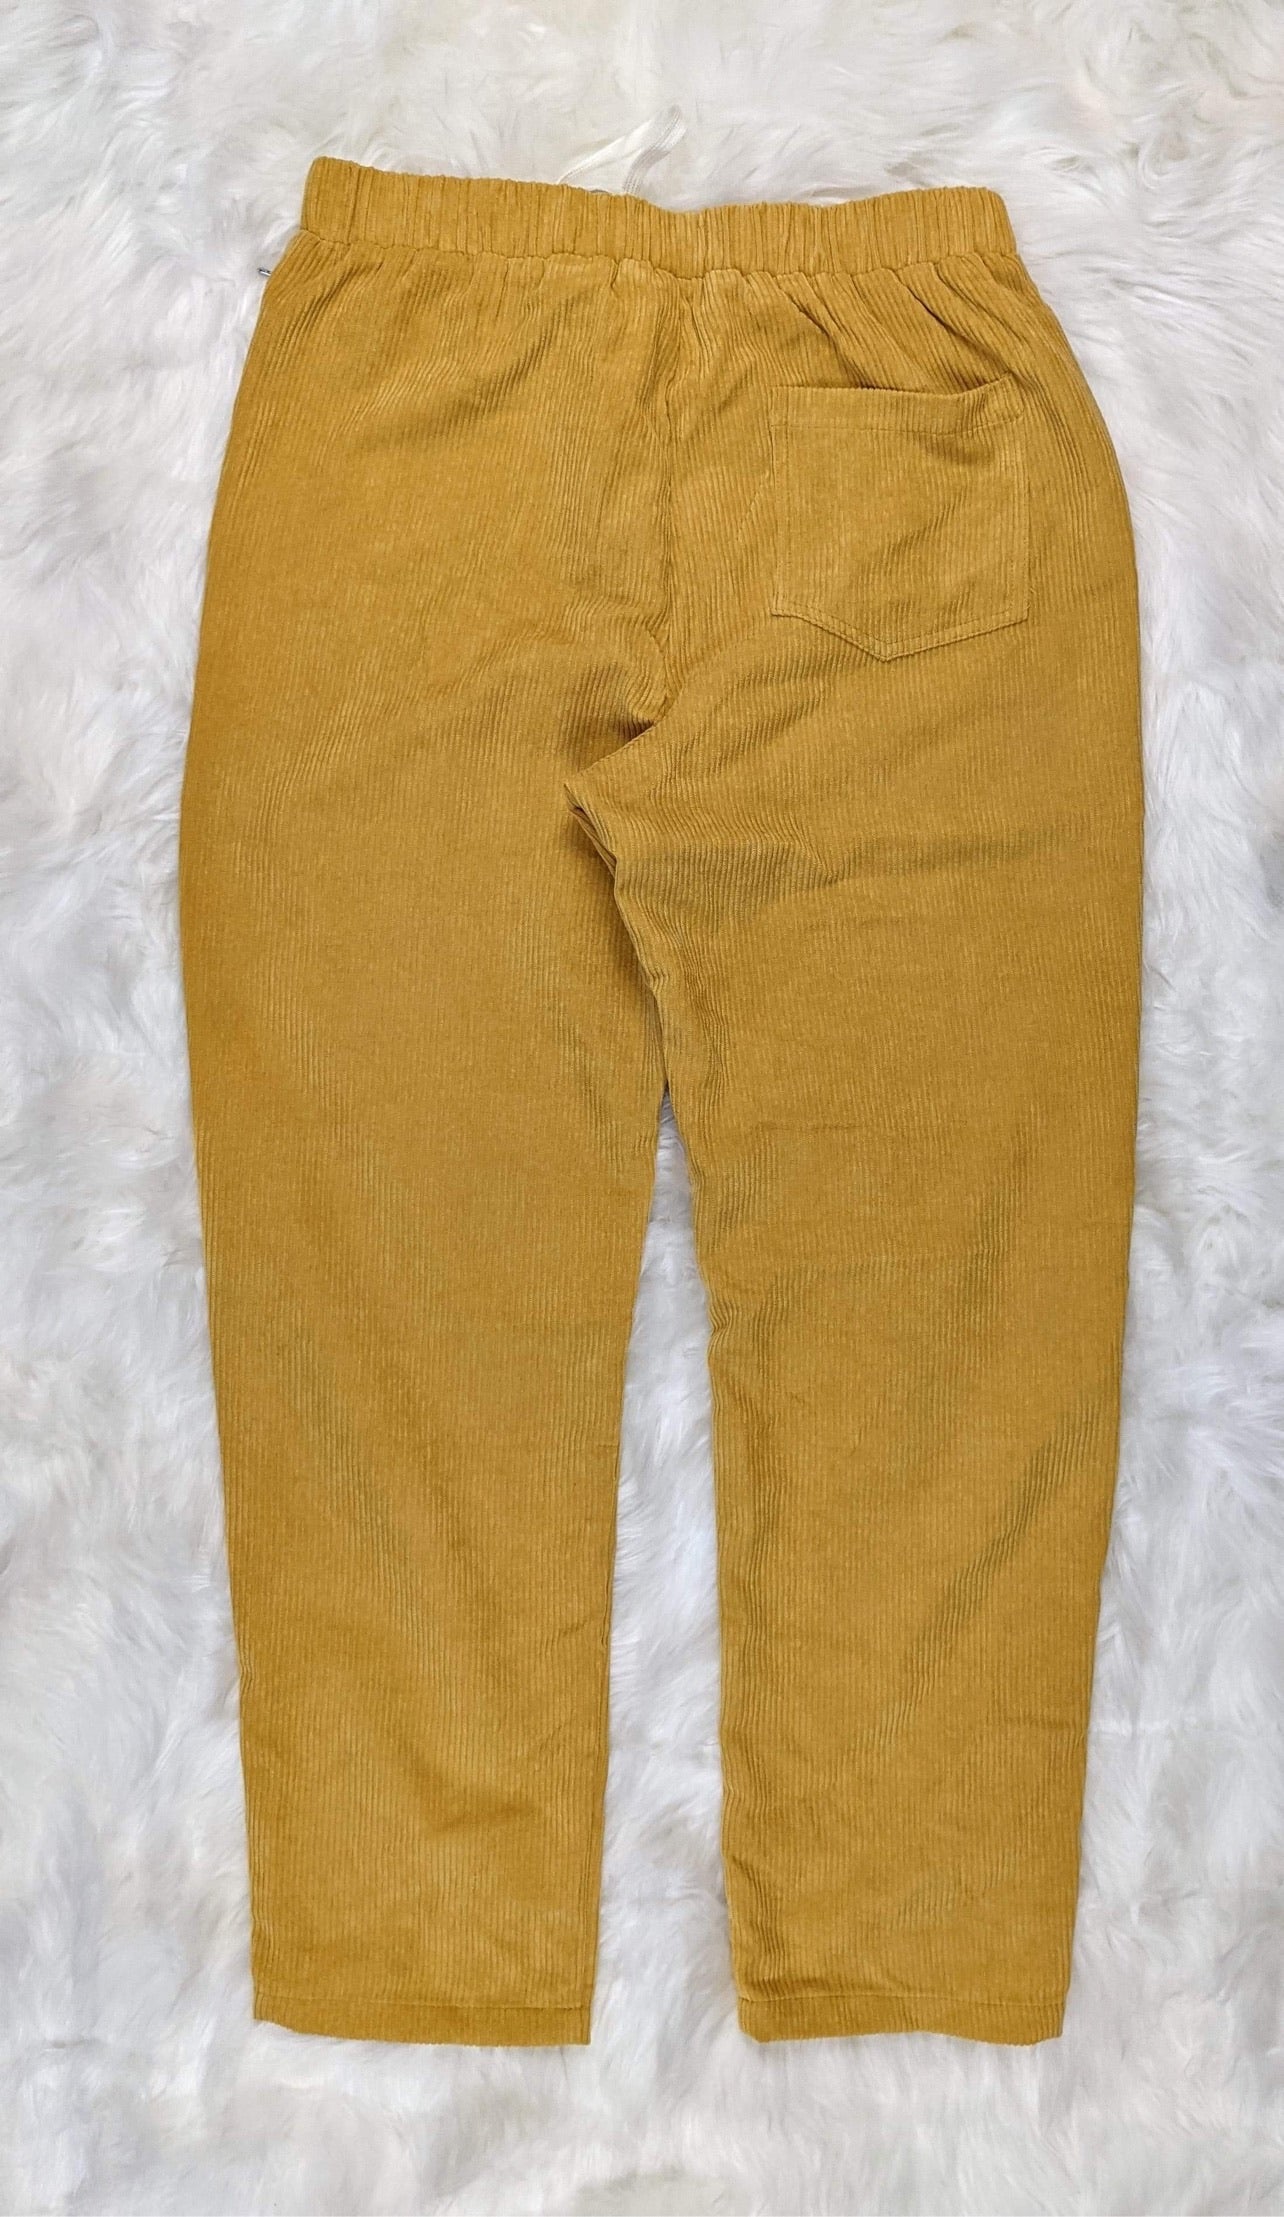 The Mellow Yellow Pants